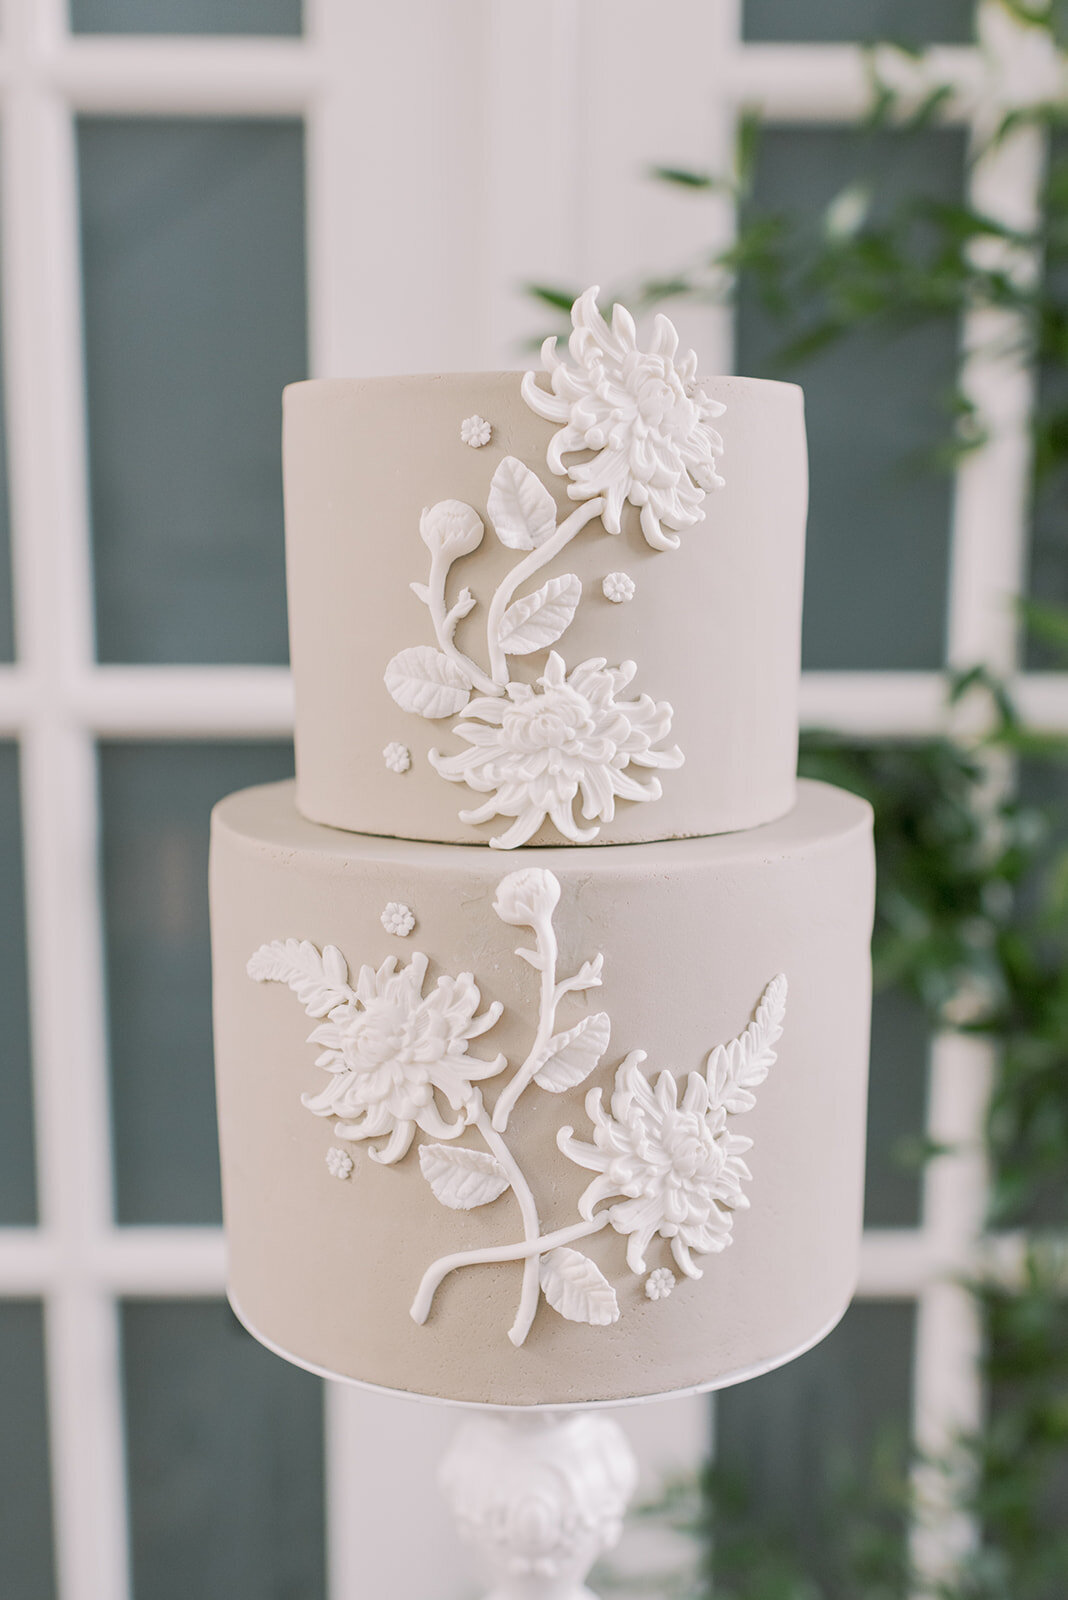 Edmonton-Wedding-Planner-Wedding-Cake-Details